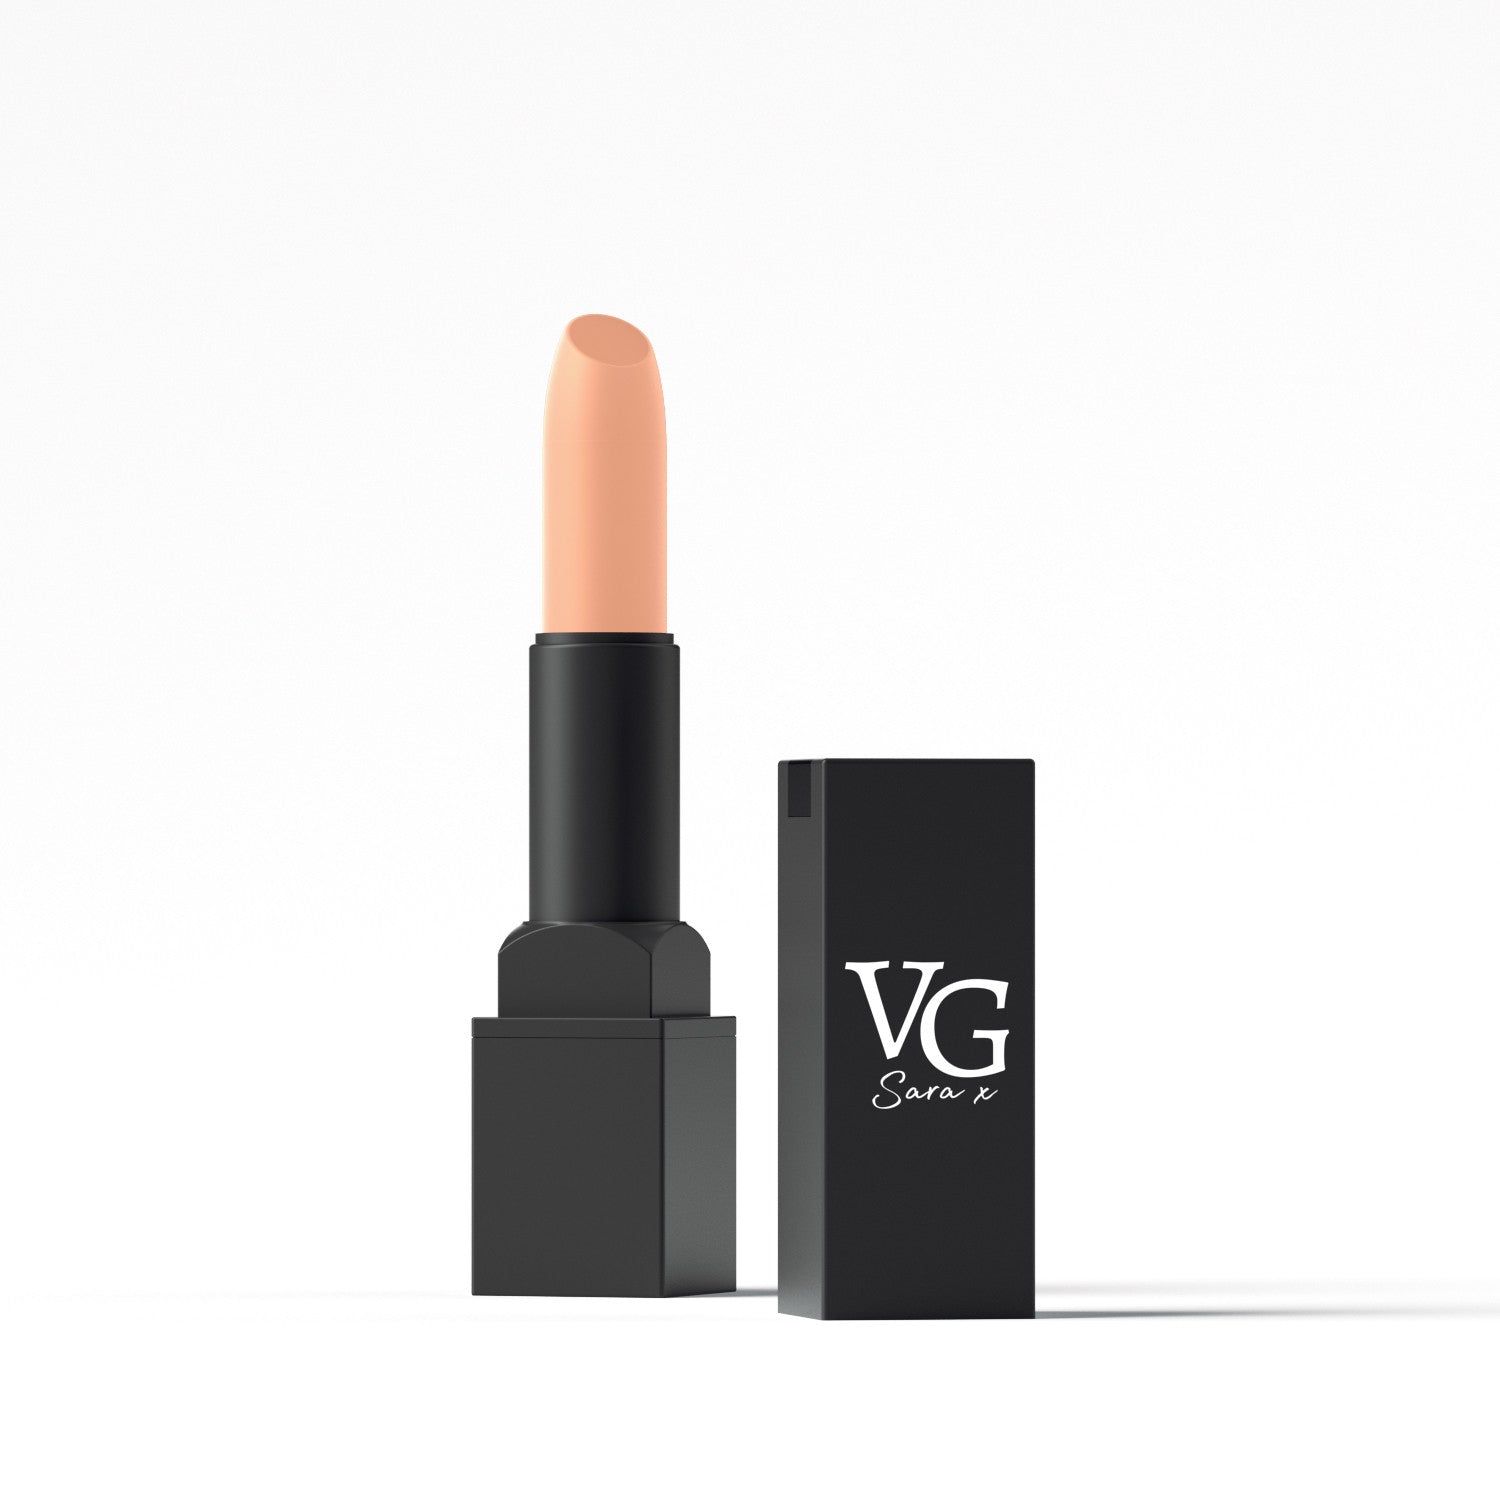 VG Cosmetics lipstick showcasing the VG emblem on the close-up